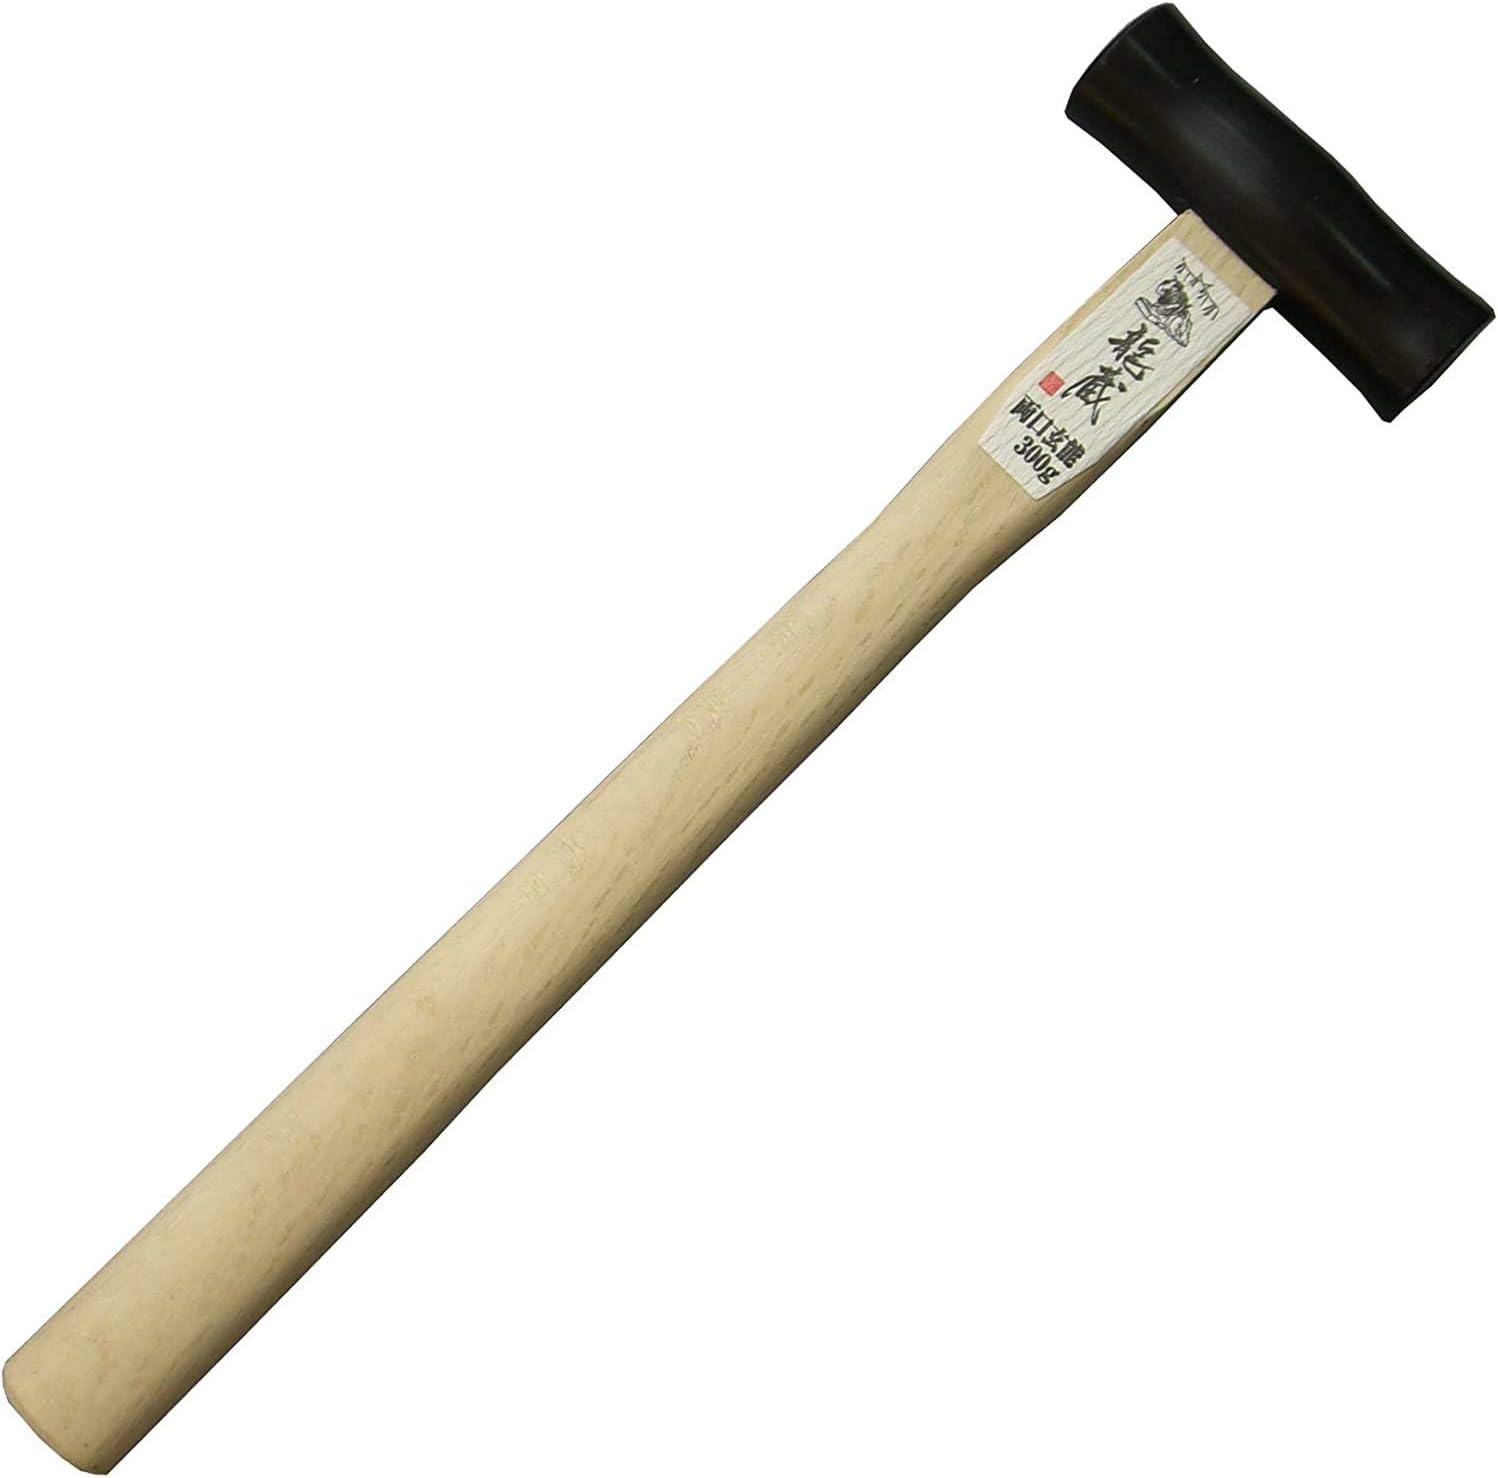 Kakuri Chisel Hammer 10.5 oz / 300g, Japanese Woodworking Hammer GENNO for Chisel, Plane, Nail, Seldge Hammer Wooden Handle, Made in J